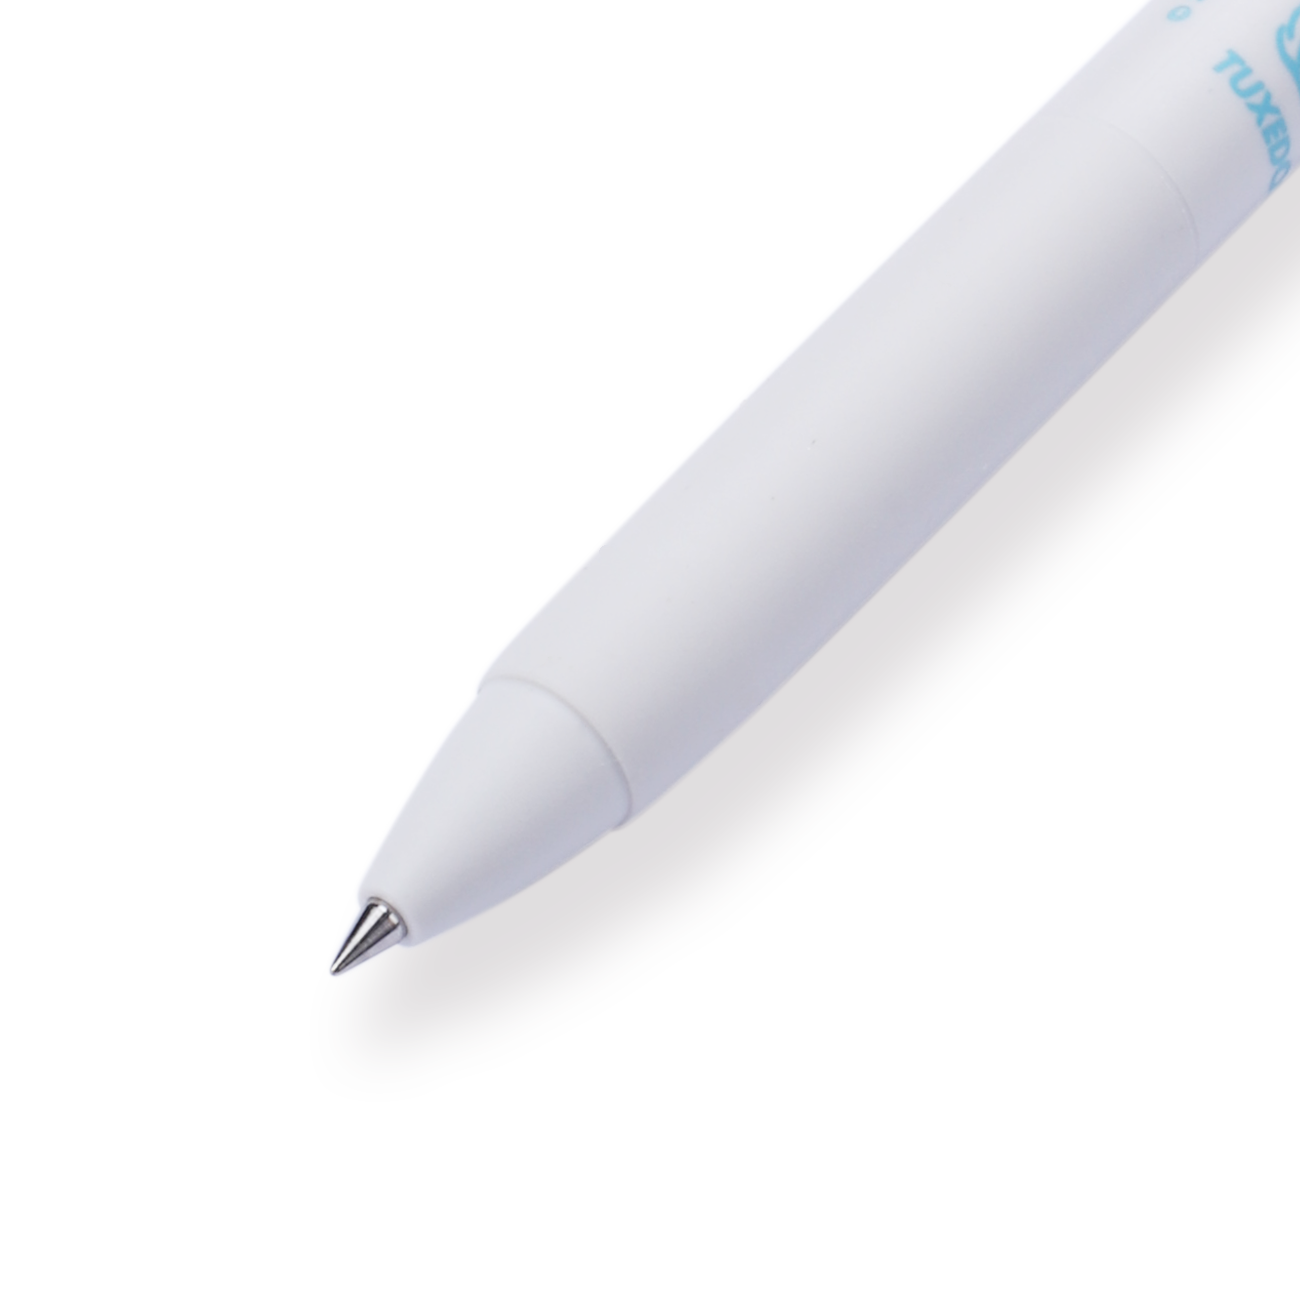 Uni-ball One Sanrio Limited Edition Gel Pen - 0.38 mm - Tuxedosam - Stationery Pal